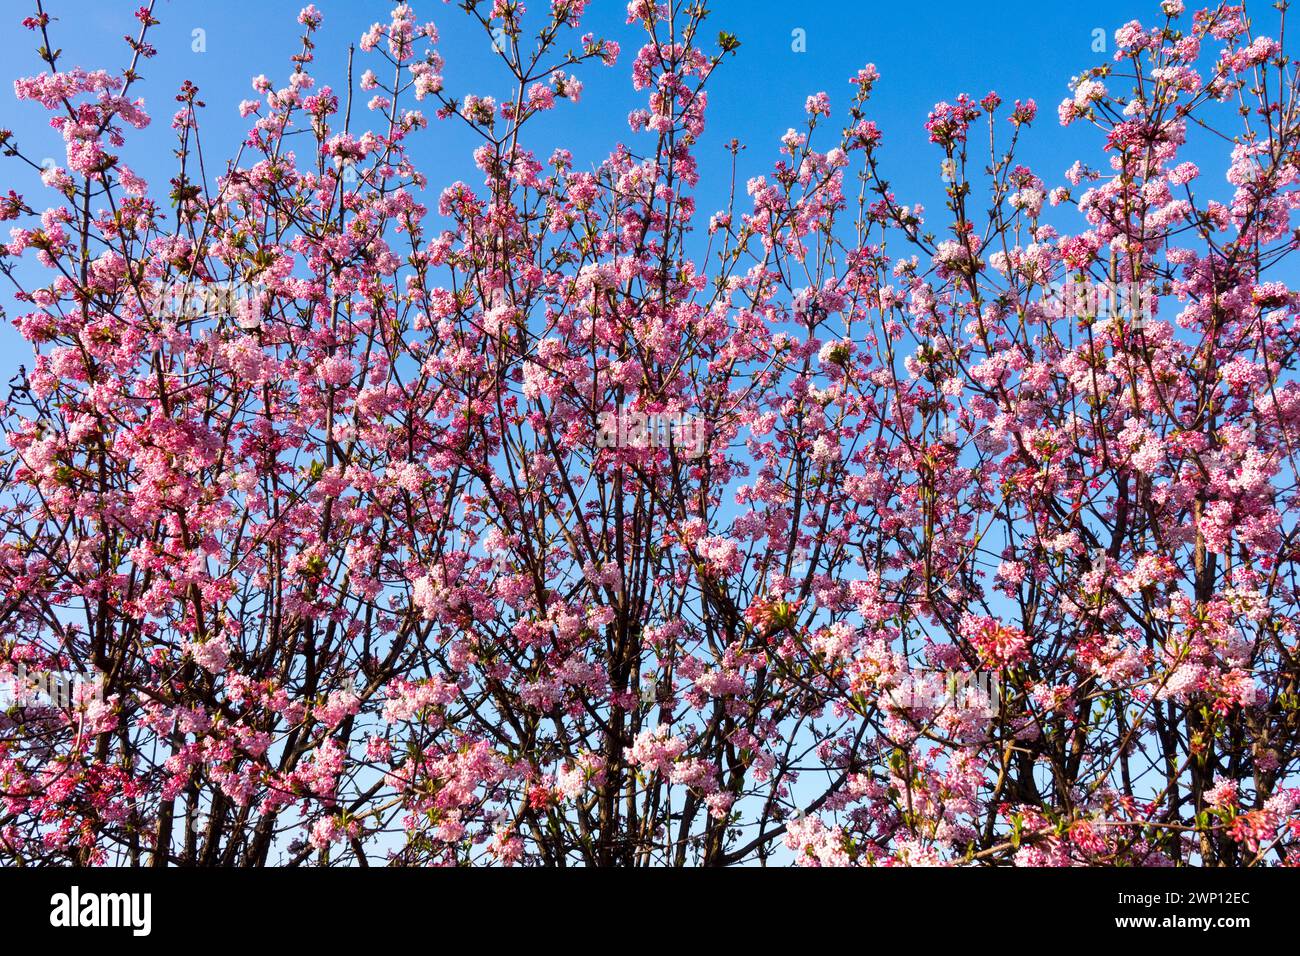 Winter Flowering shrubs Hedge Viburnum Pink Blossoms on branches Blooming Viburnum × bodnantense 'Dawn' Bodnant Viburnum Flowers Pink Dawn March Stock Photo